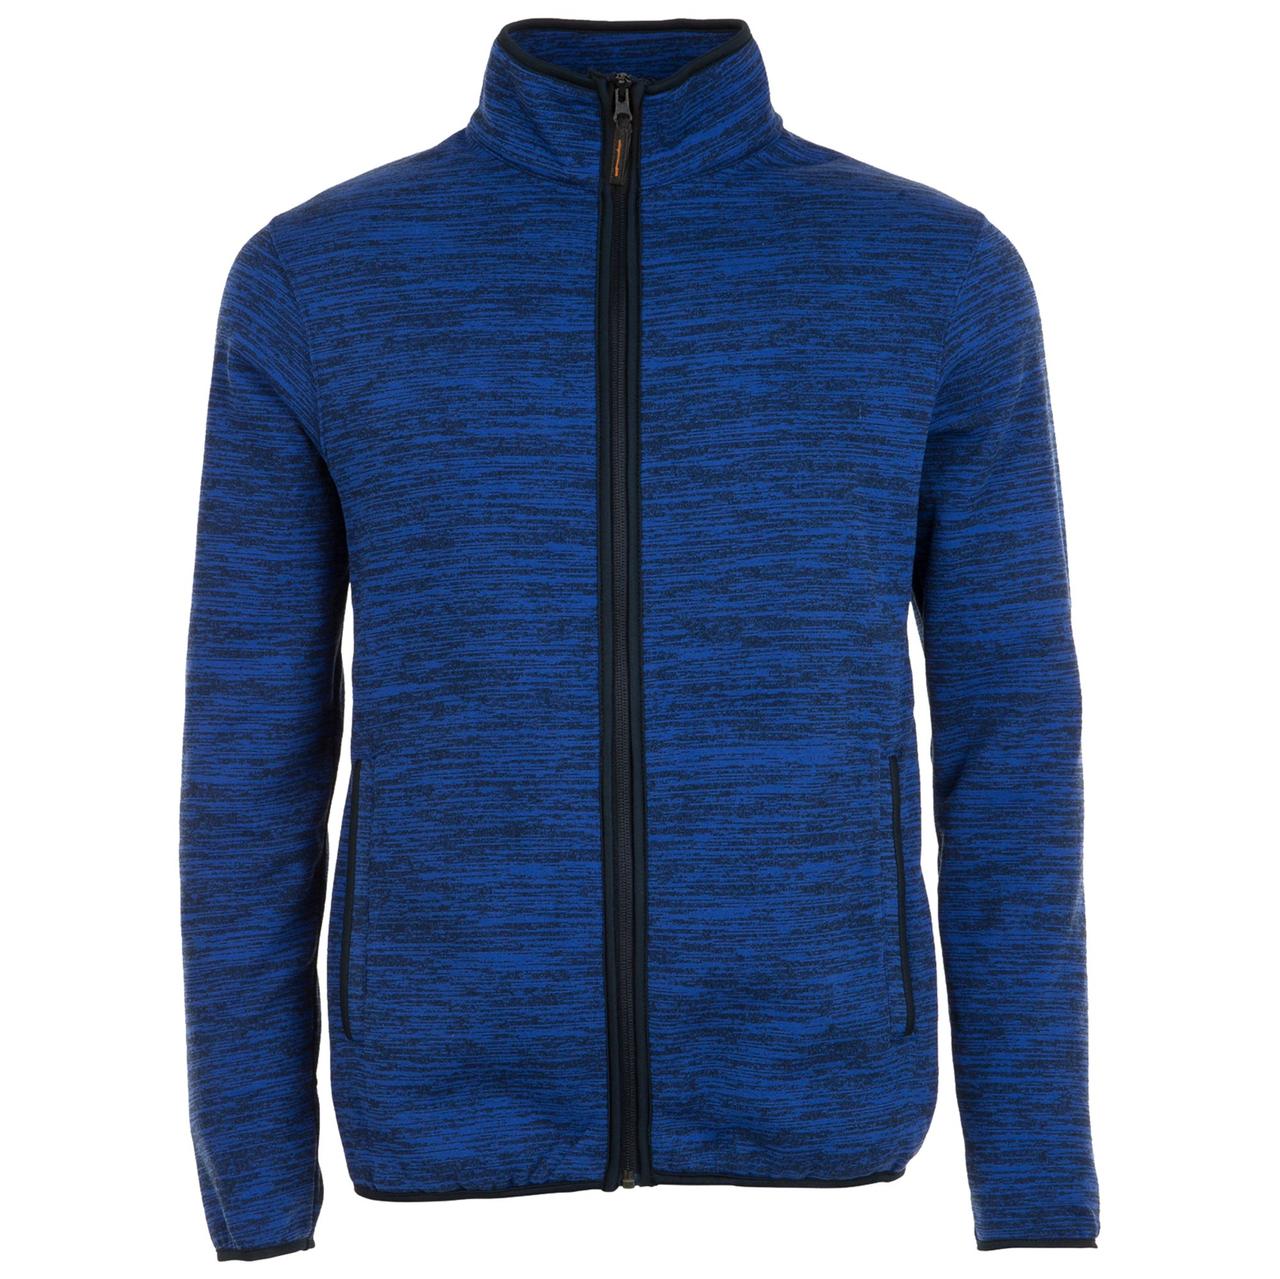 Куртка флисовая Turbo, синяя с темно-синим (артикул 01652204)